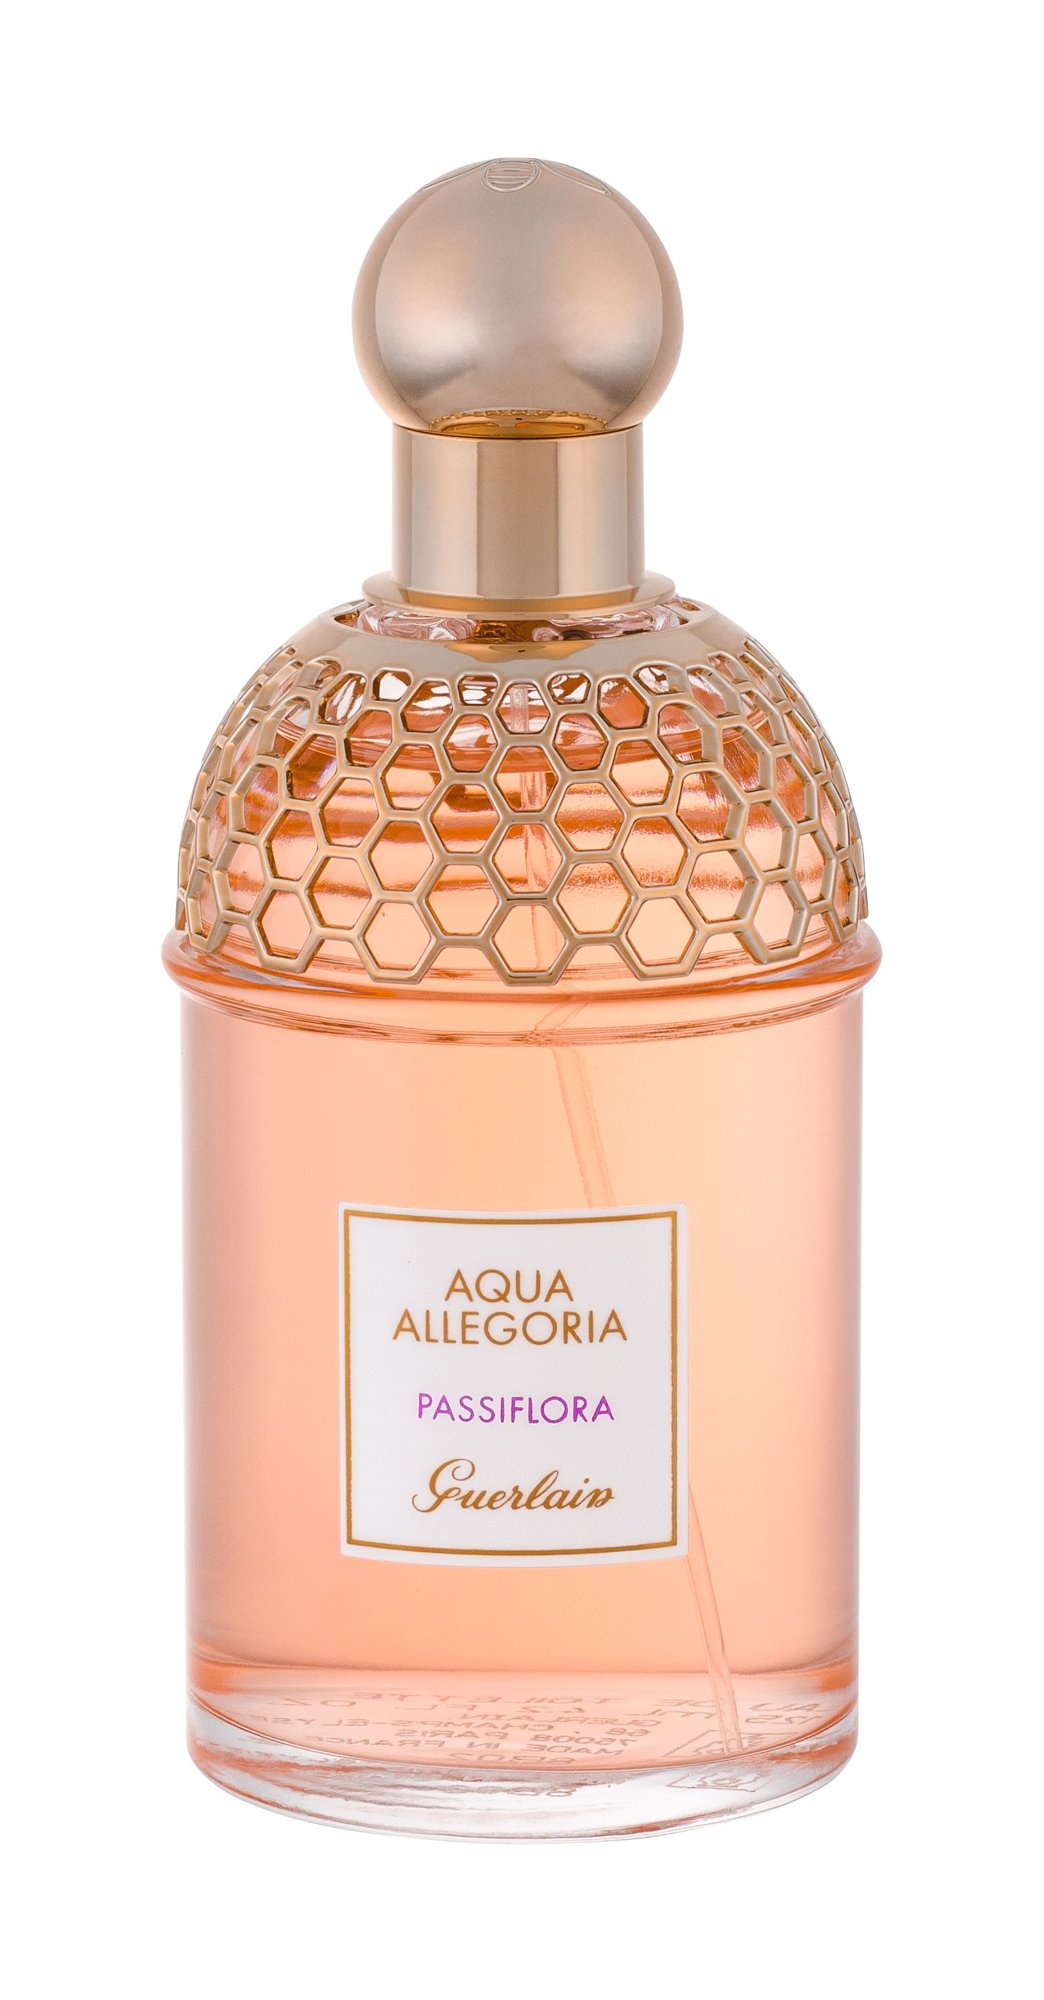 Guerlain Aqua Allegoria Passiflora, Toaletní voda 125ml